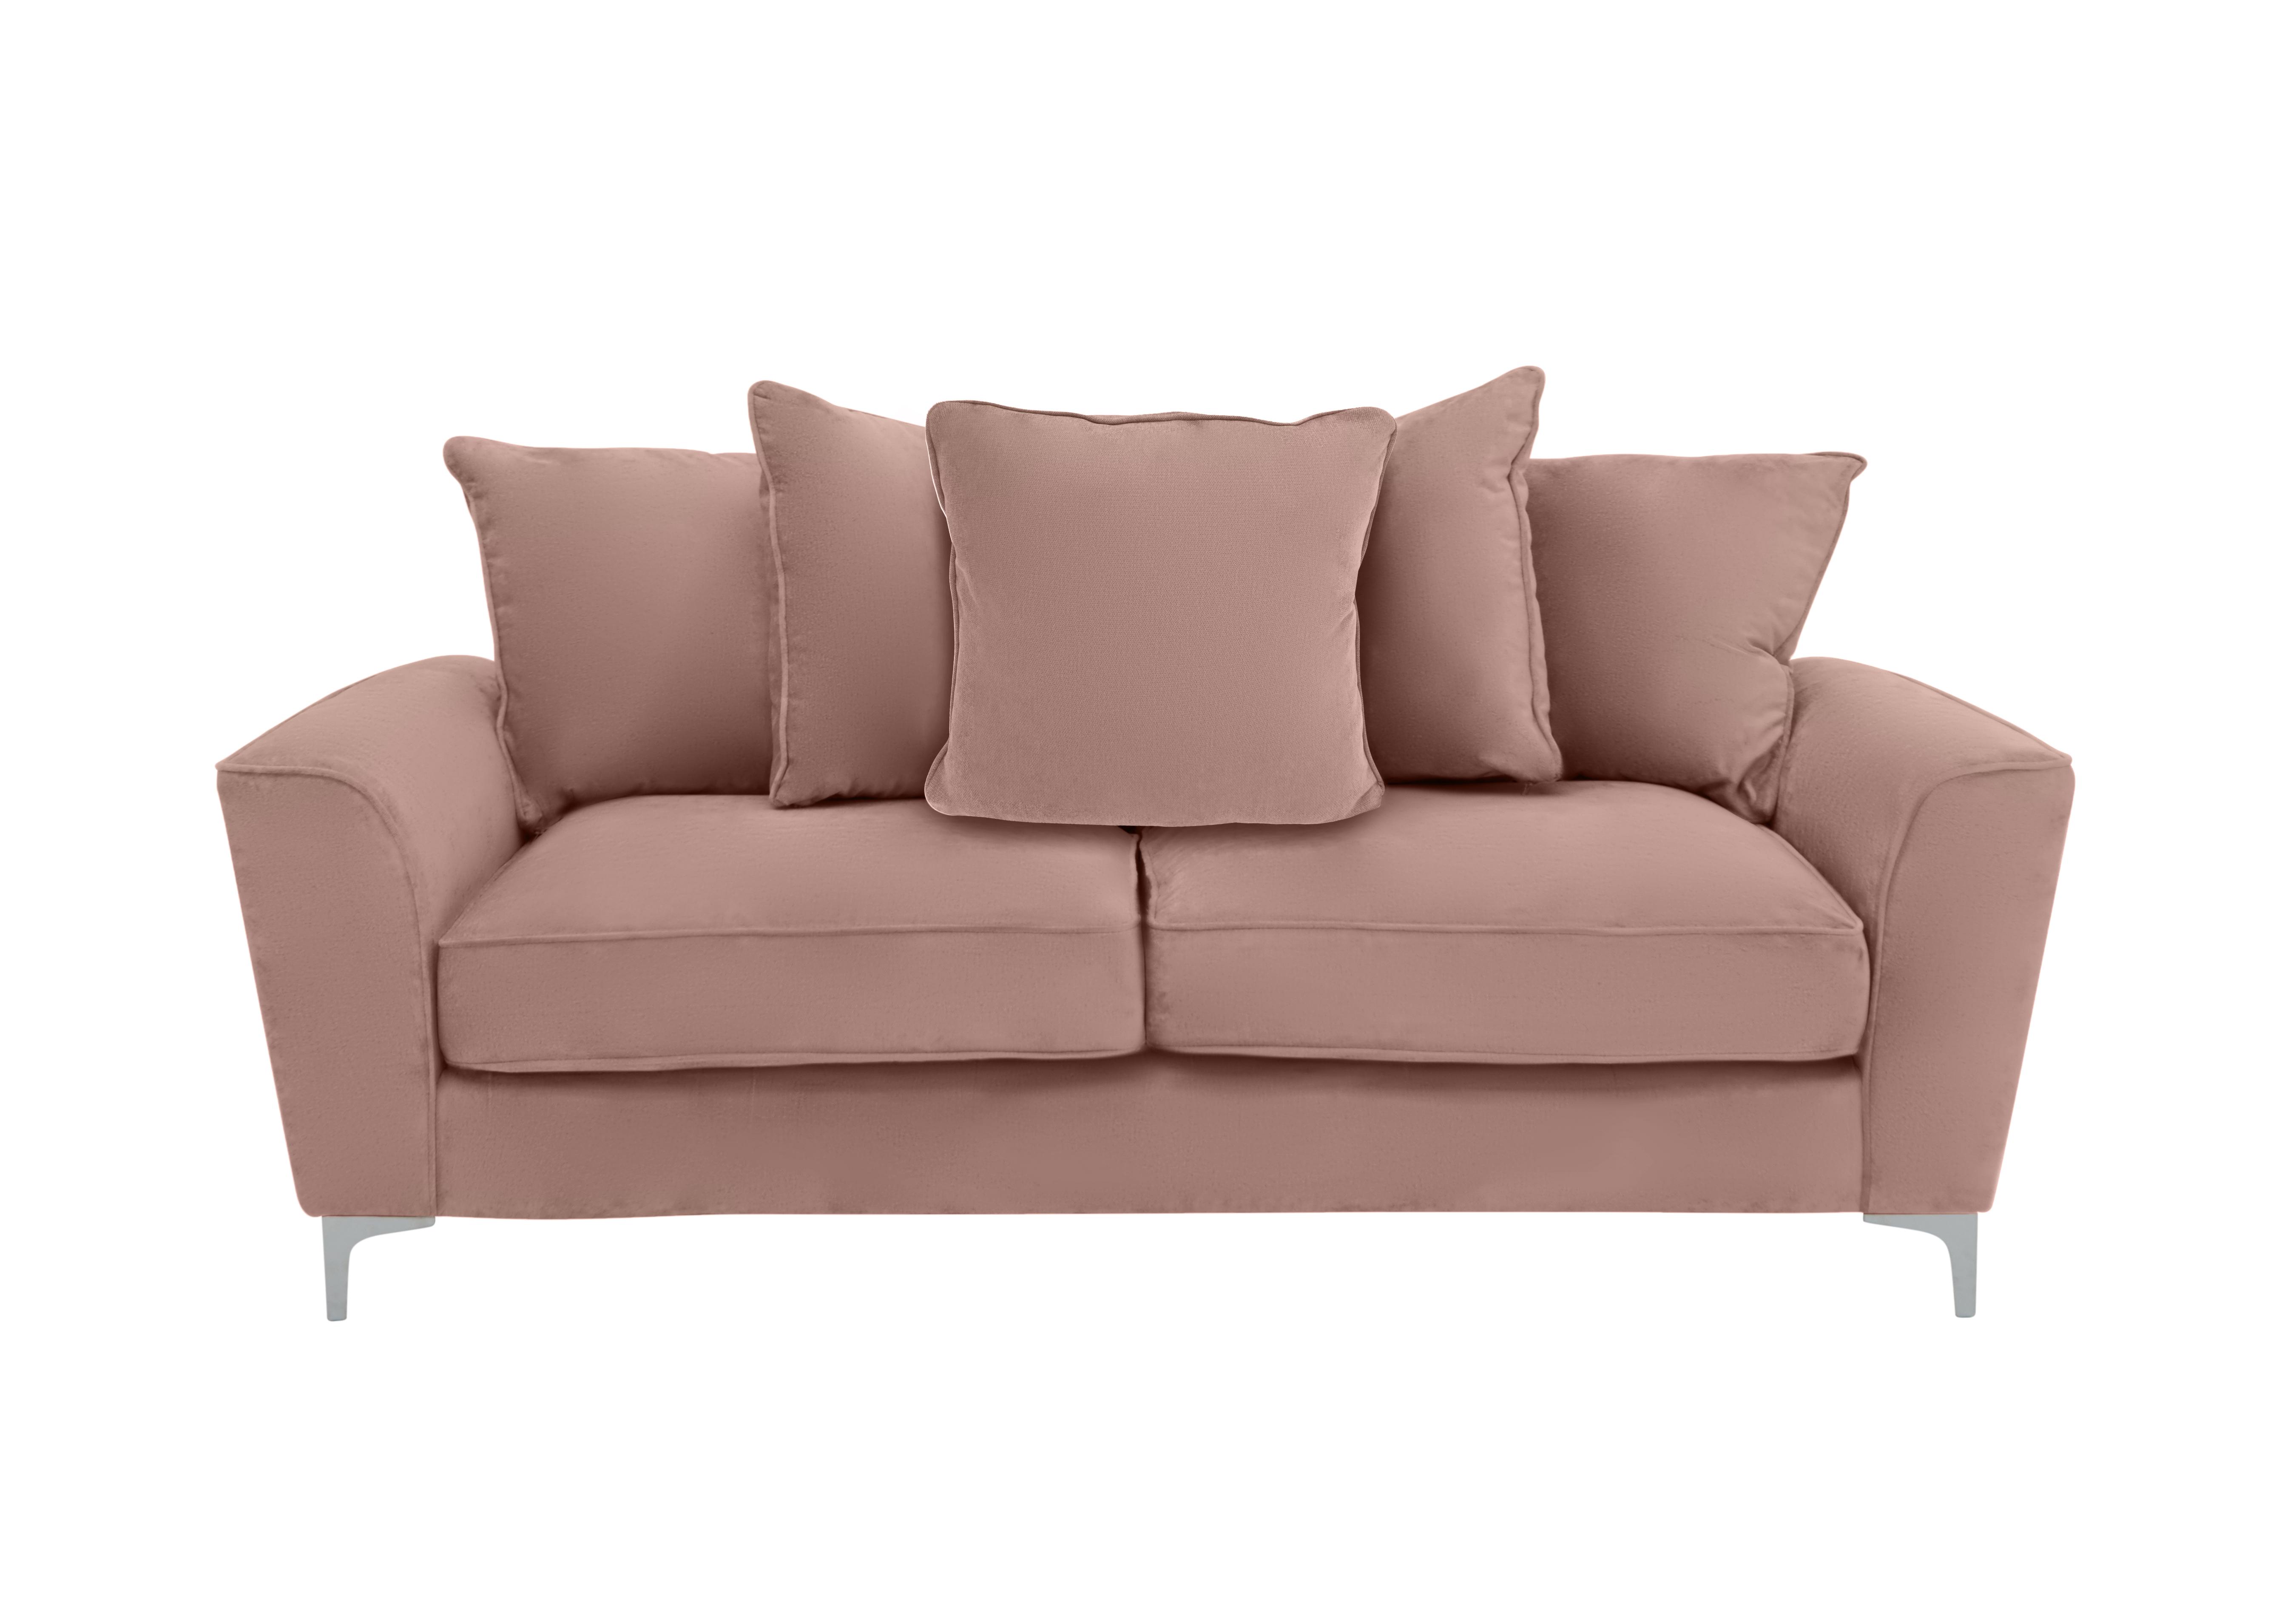 Legend 3 Seater Pillow Back Fabric Sofa in Kingston Blush on Furniture Village